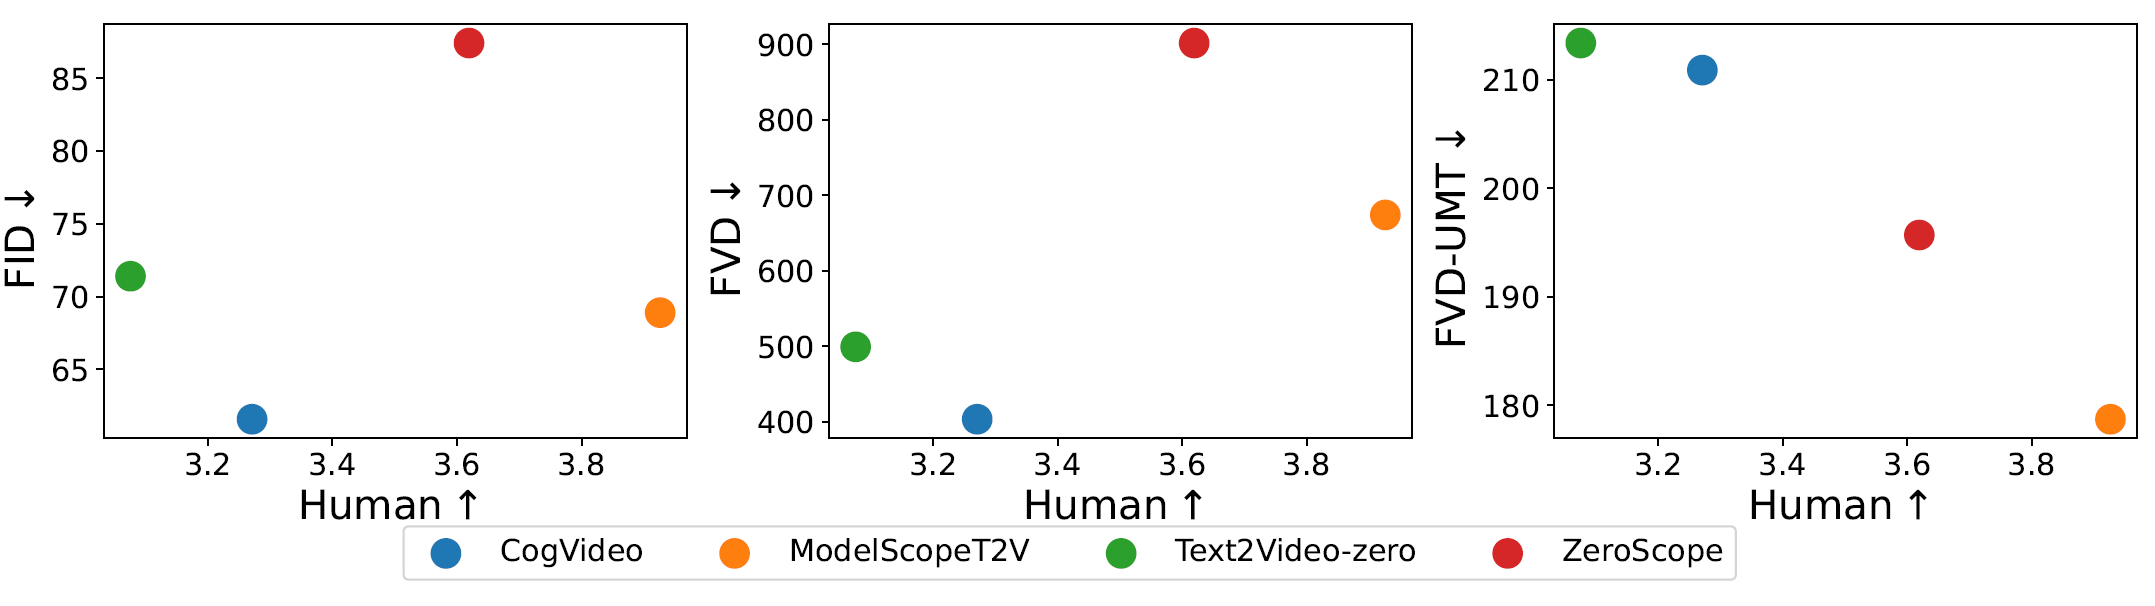 video_quality_rank_correlation.jpg